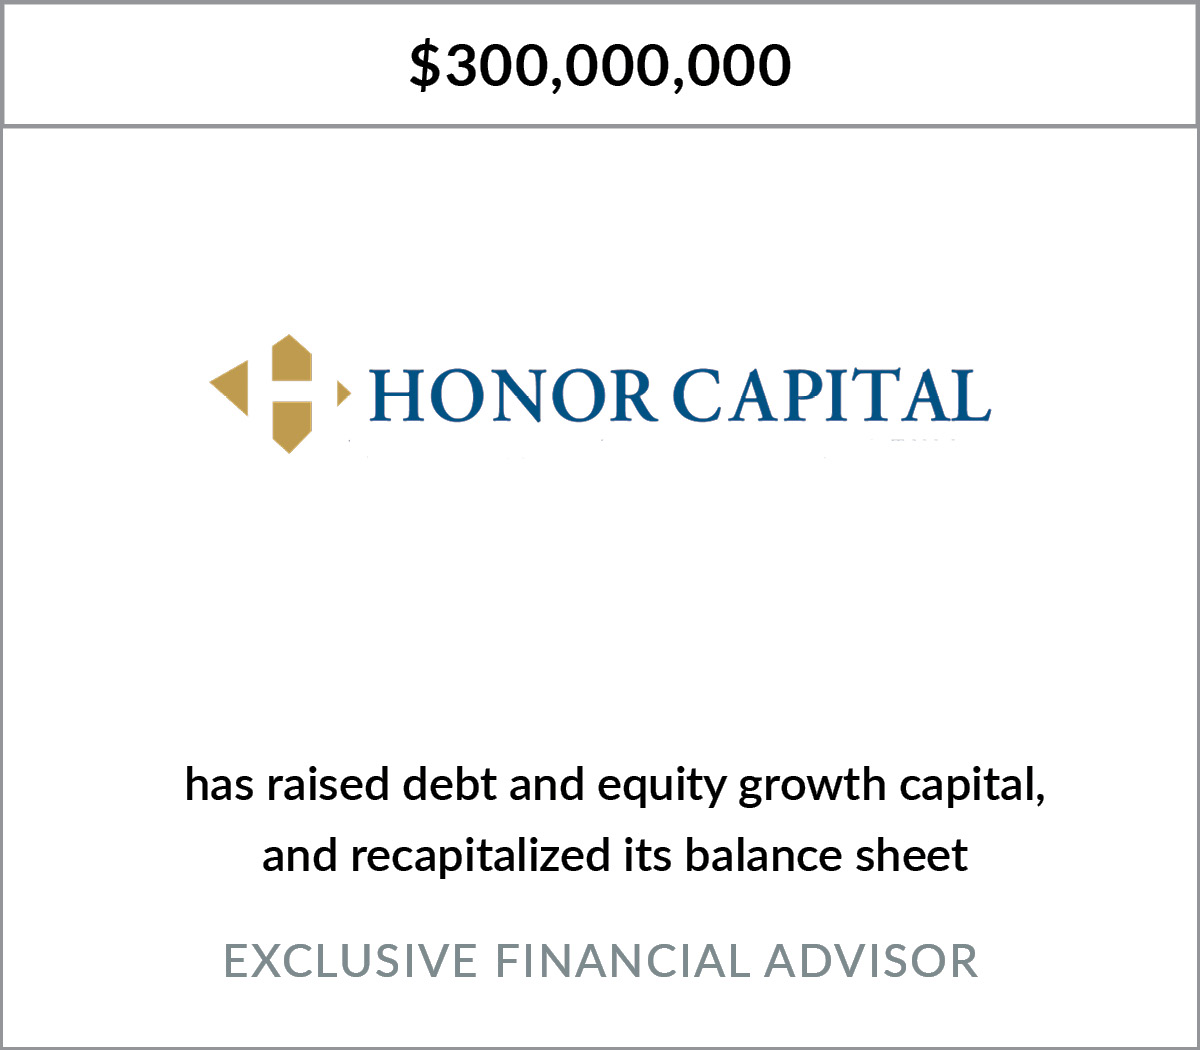 Bryant Park Capital Advises Honor Capital, A Leading U.S. Premium Finance Company